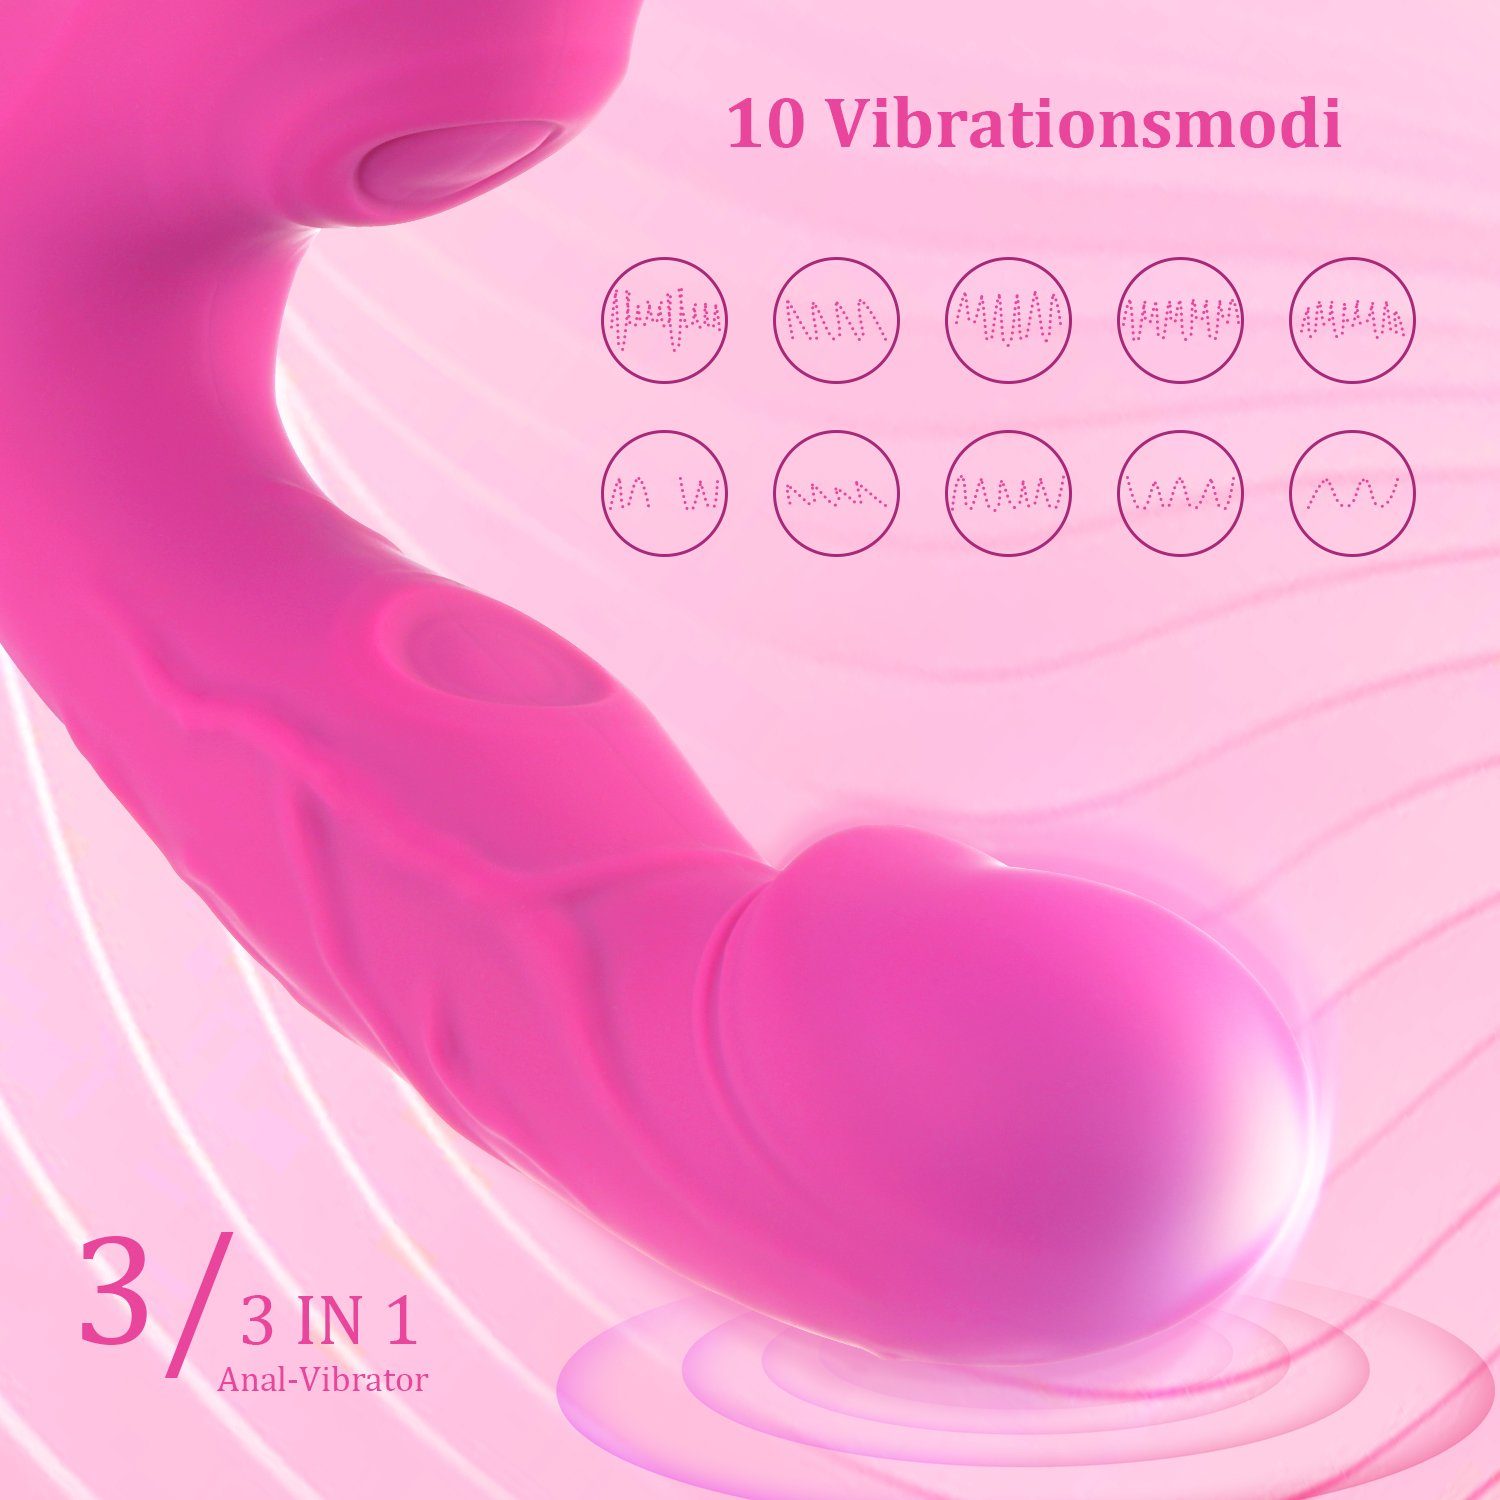 LOVONLIVE G-Punkt-Vibrator 3 und in Pulsationsmodi Punkt Rosa 10 Klitoris Frauen G stimulator Sexspielzeug, Dildo 1 Vibrationsmodi und für Vaginal Vibrator 10 10 Klopfensmodi